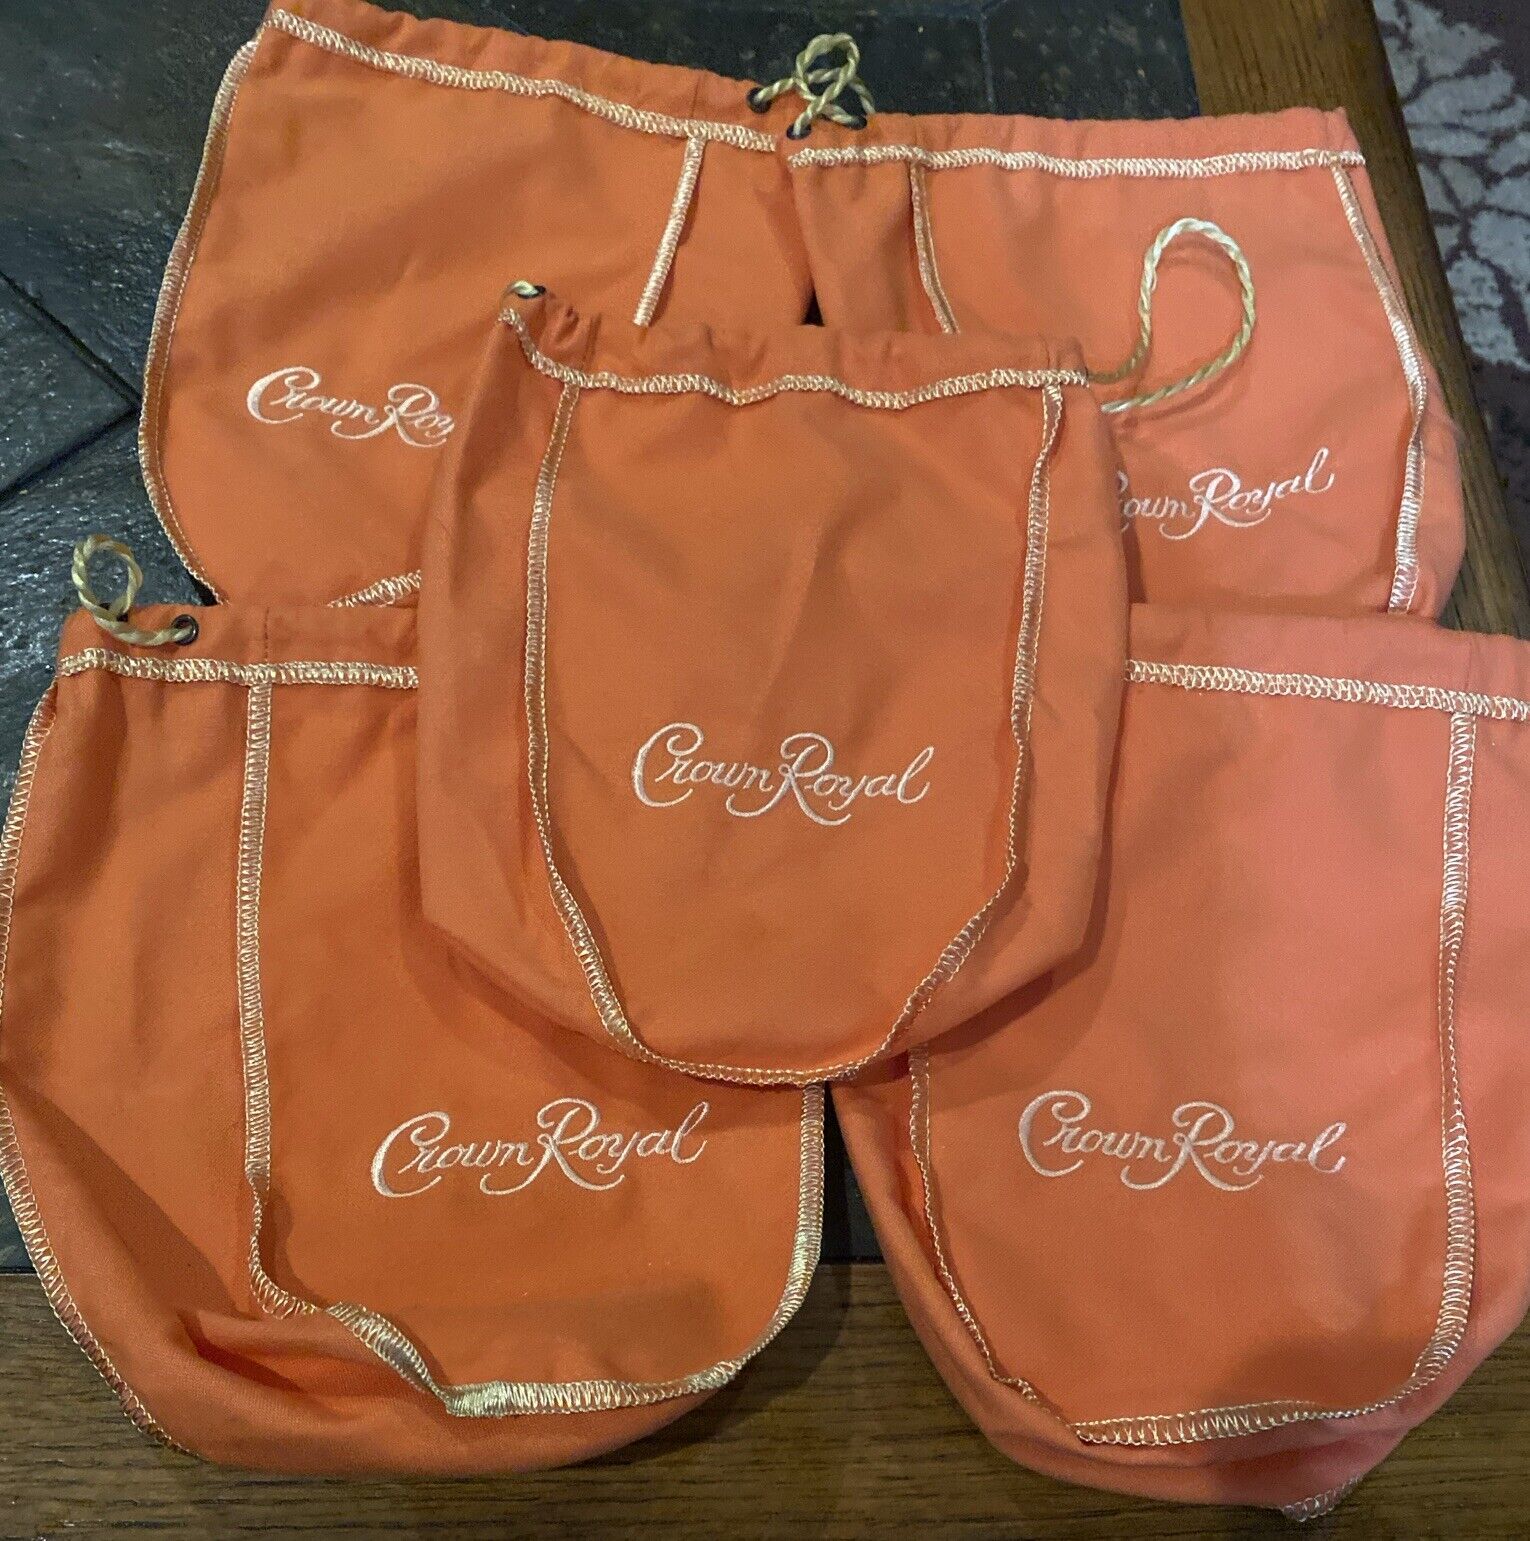 Crown Royal Peach 750 ml DrawString Felt Bags Lot of 5